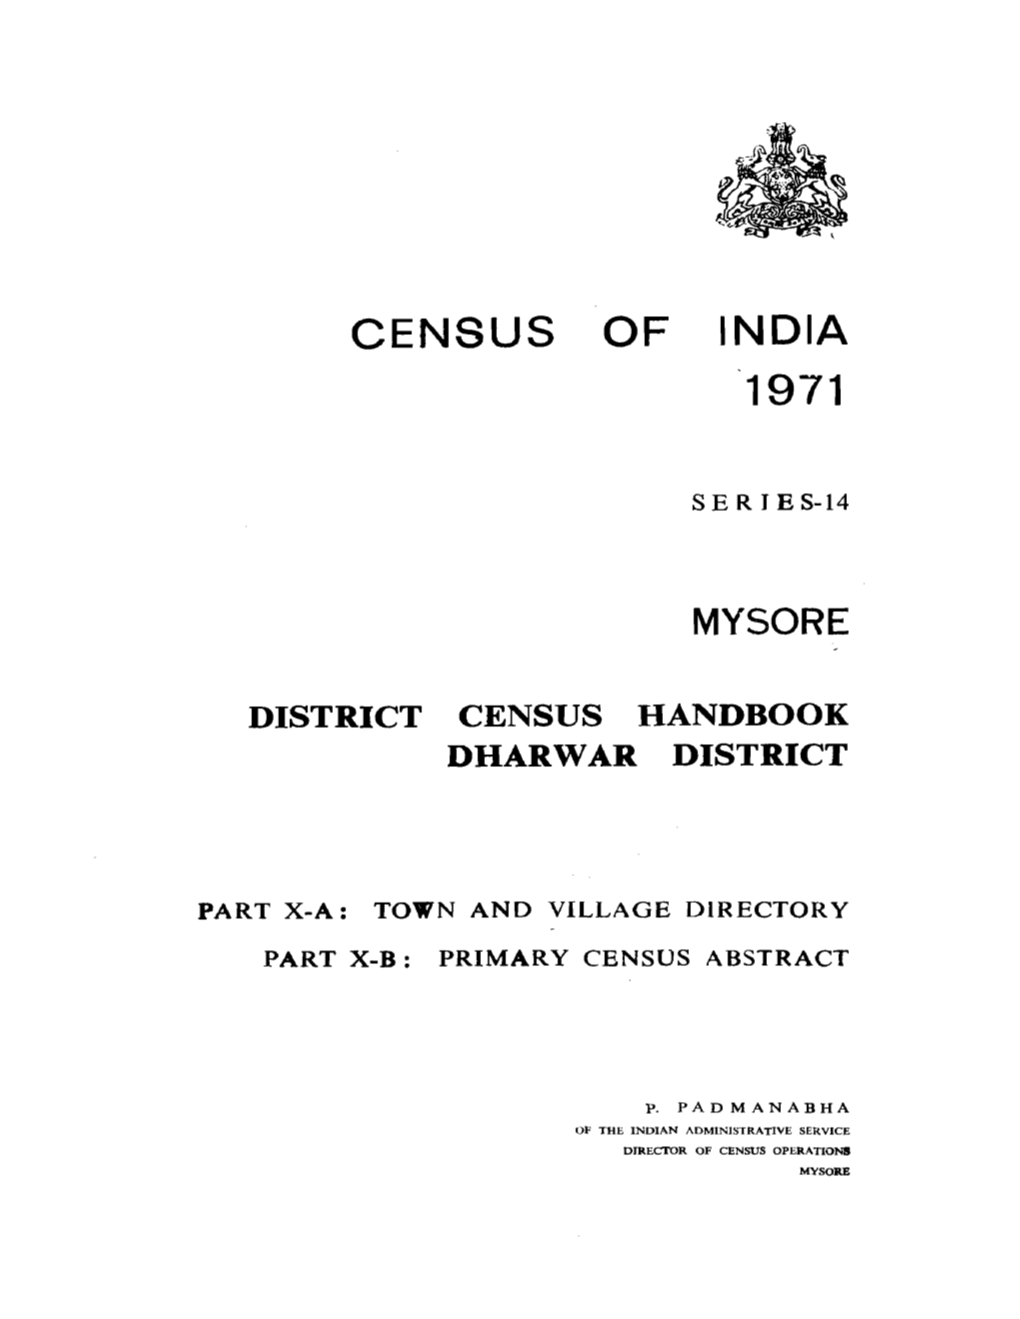 District Census Handbook, Bidar, Part X-A, B, Series-14